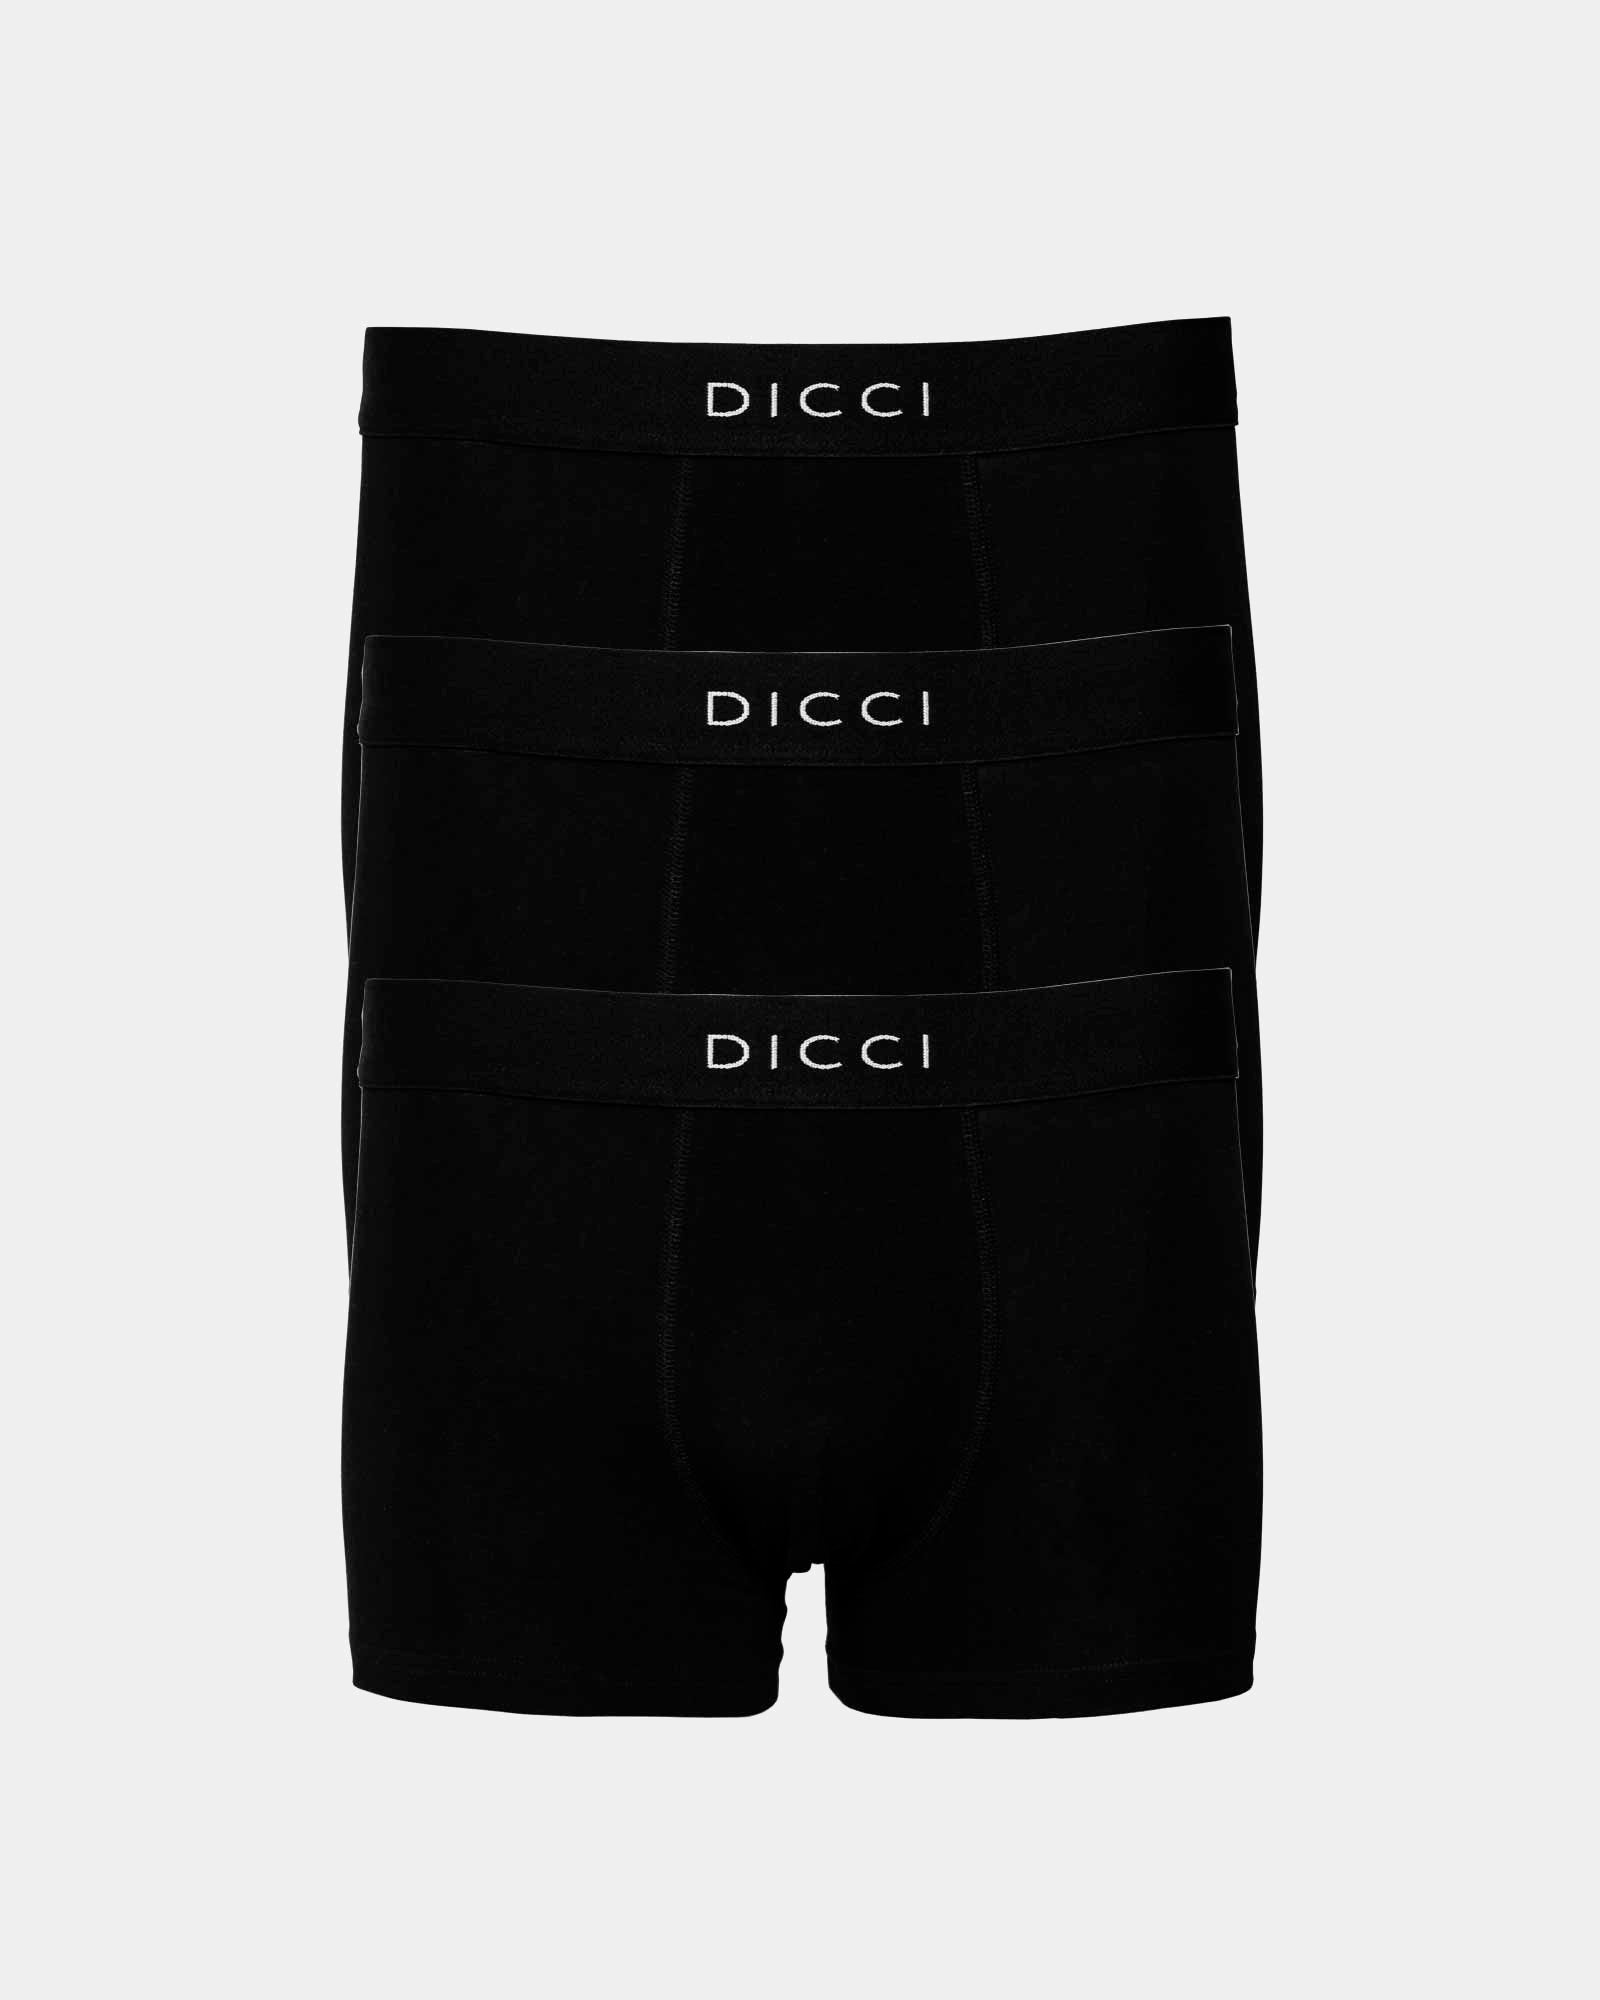 Black Dicci Boxer - Basic Boxers - 3 Pack - DICCI